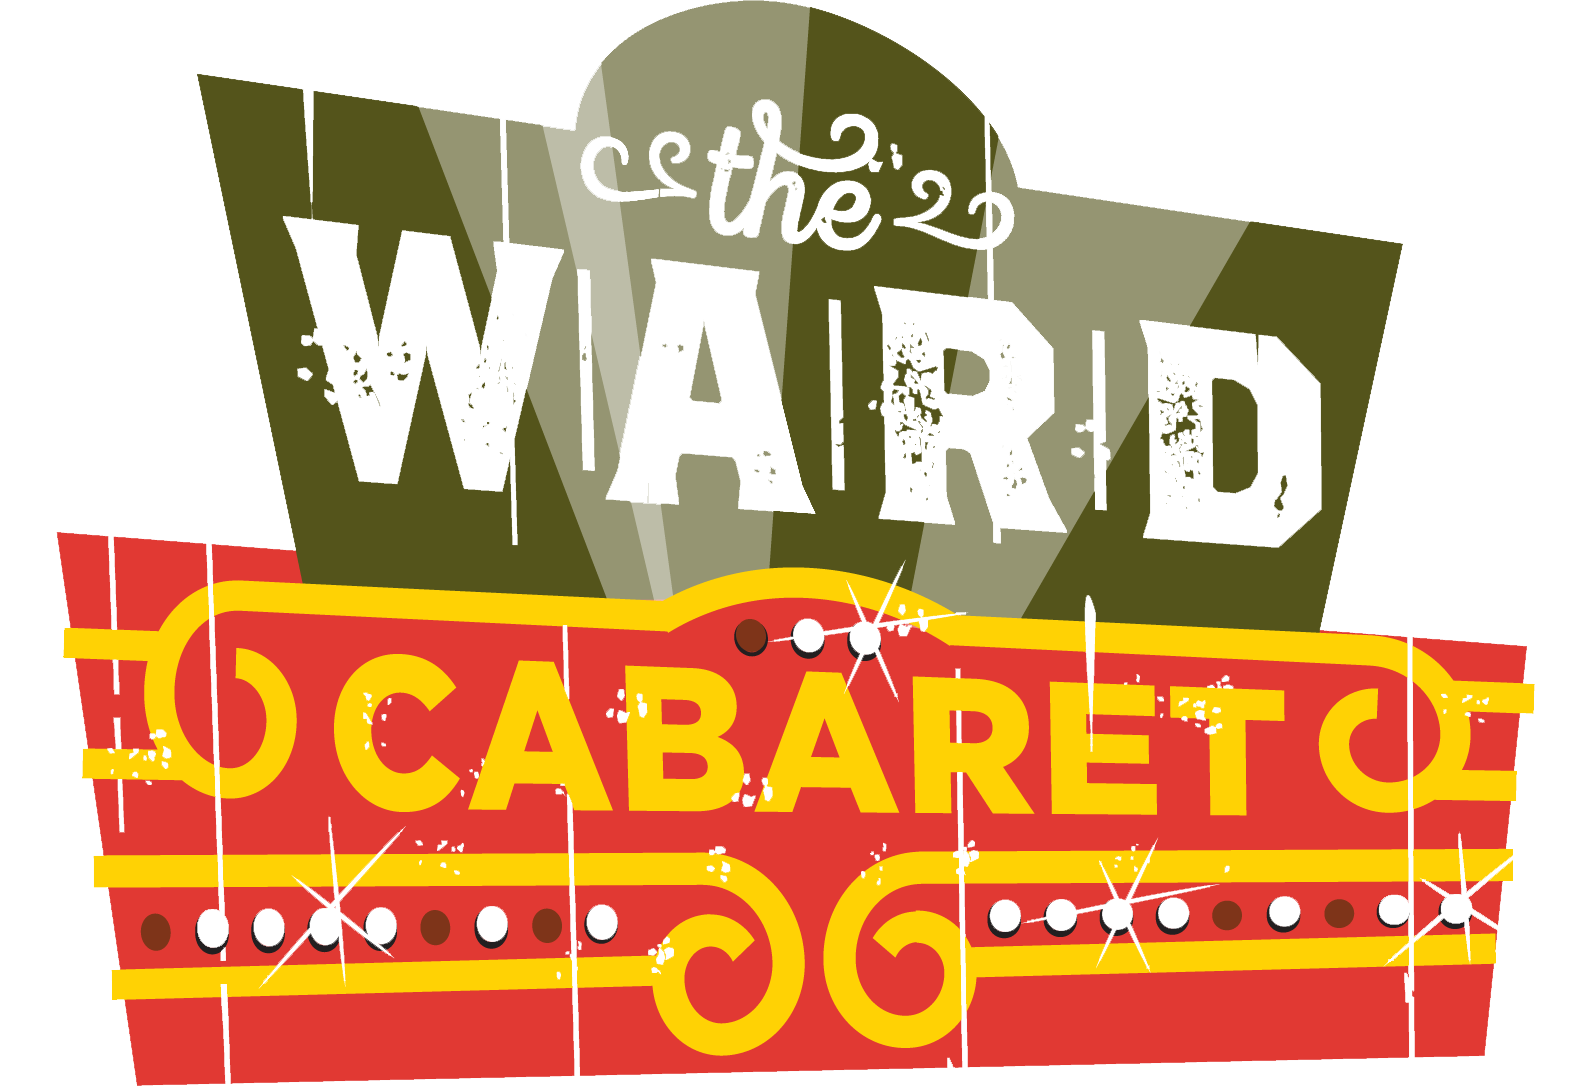 The Ward Cabaret